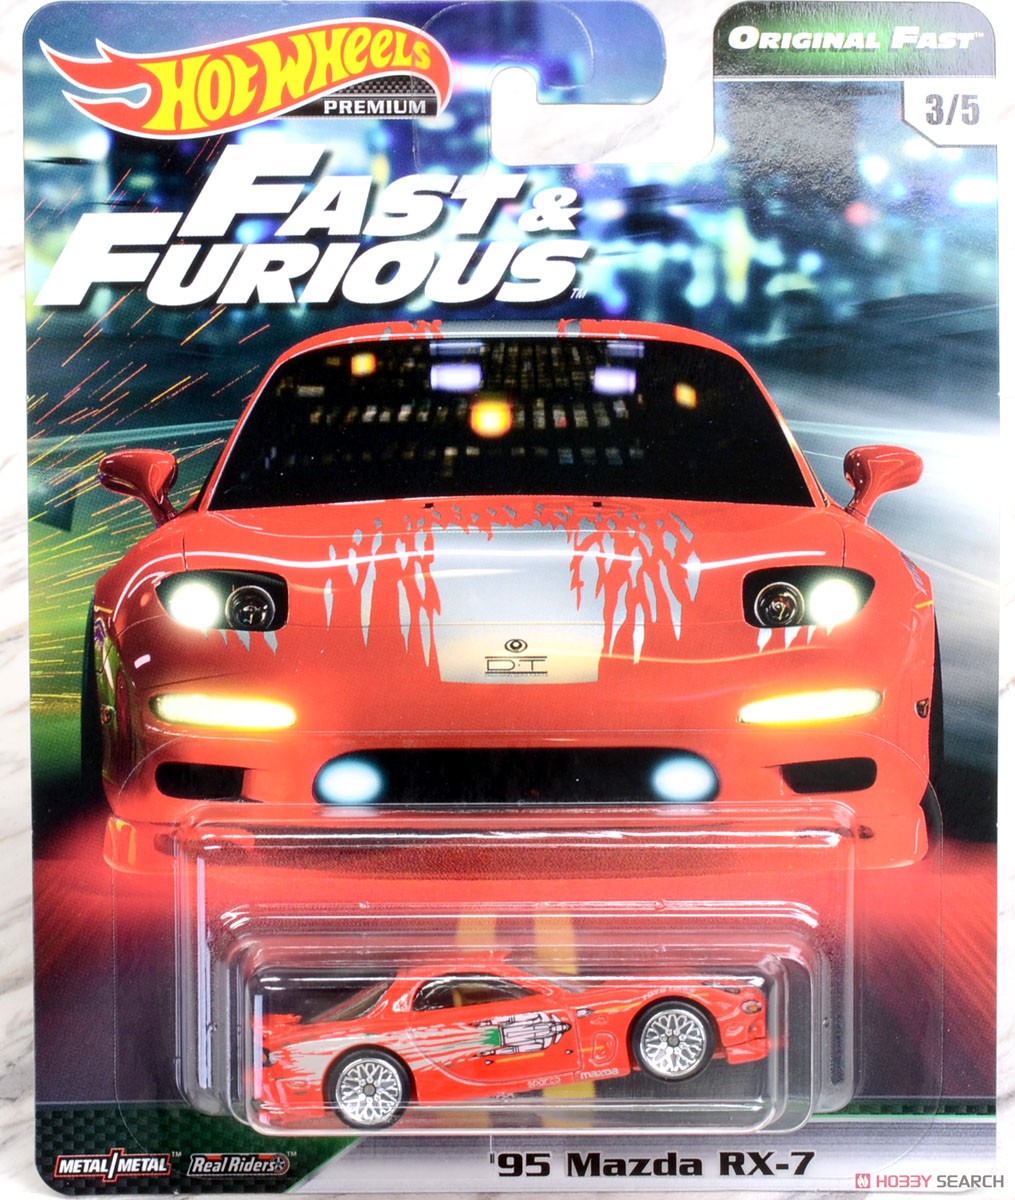 HW The Fast and the Furious Premium Assorted Original Fast `95 Mazda RX-7 (玩具) パッケージ1